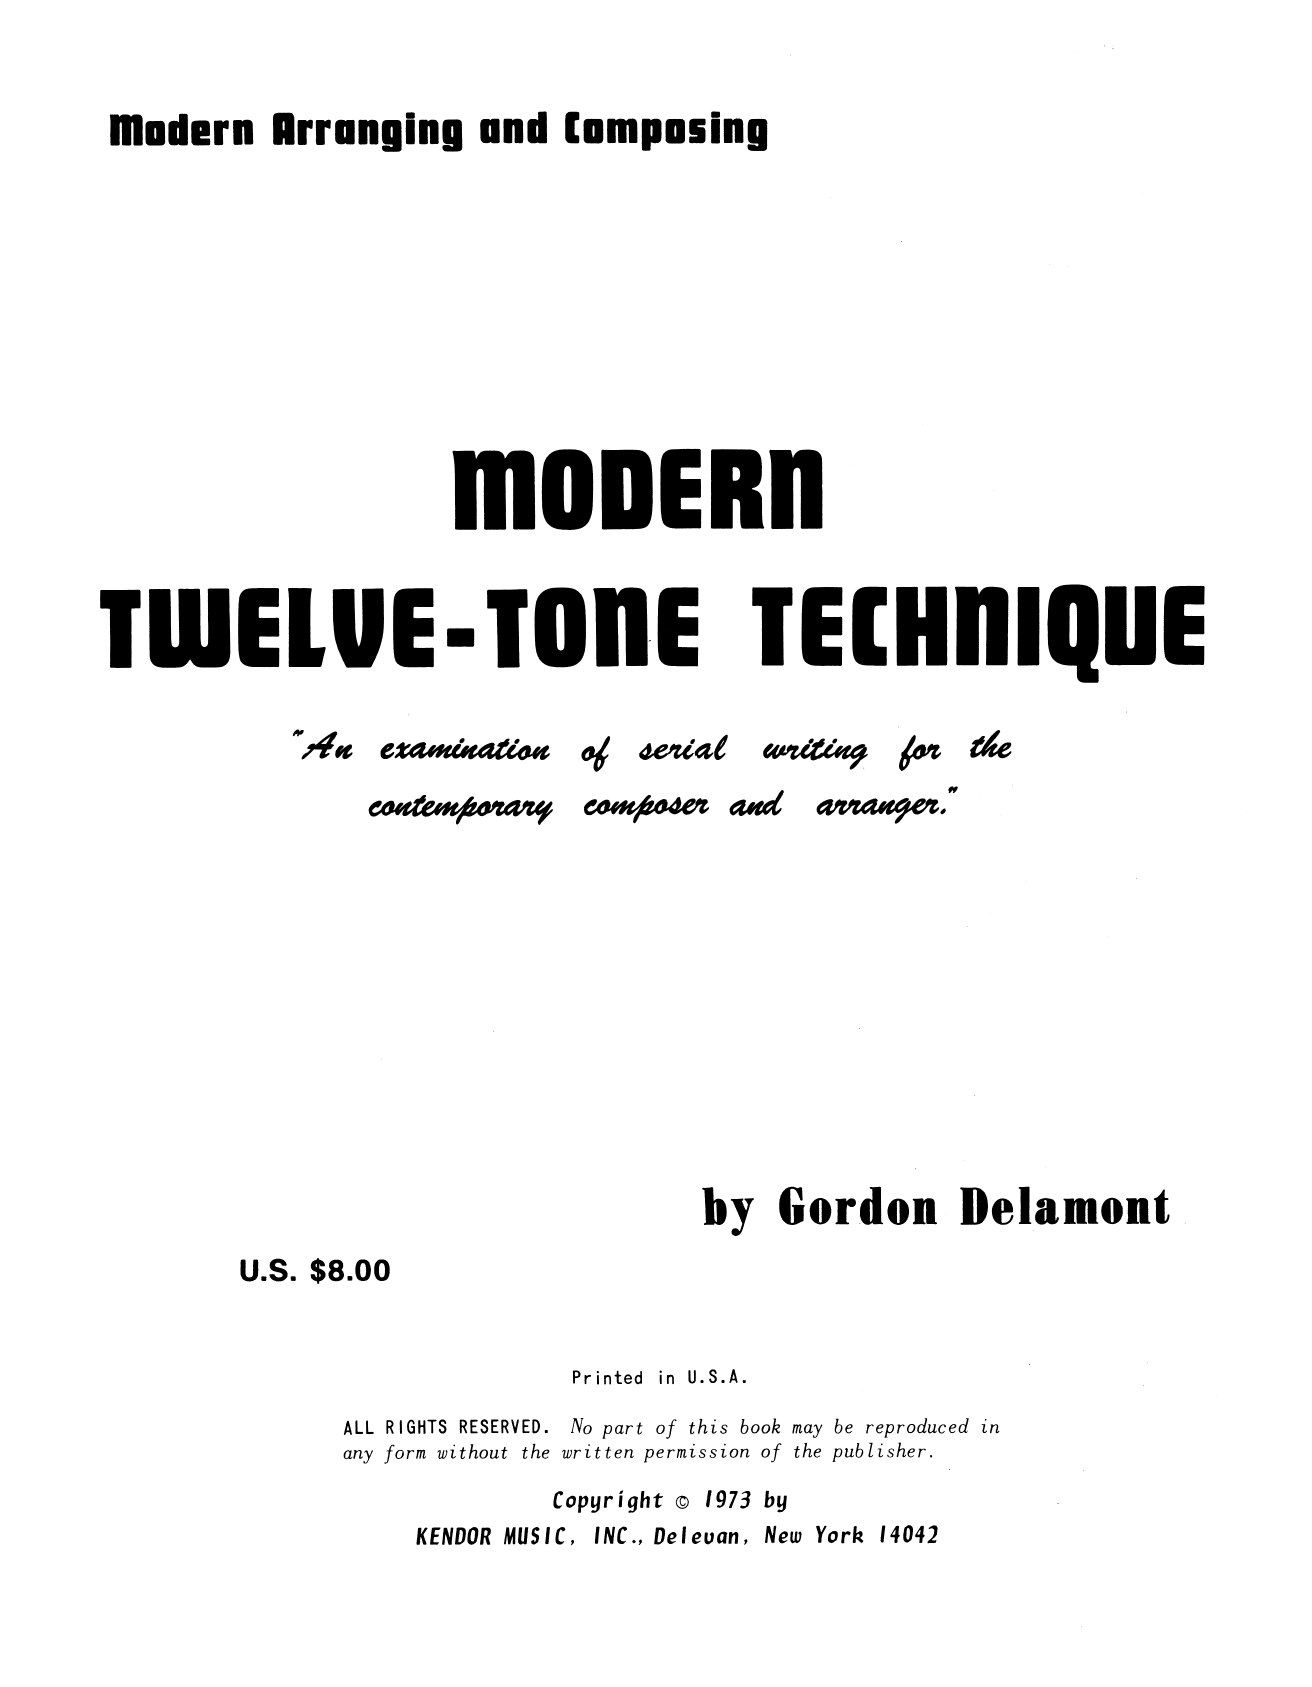 Download Gordon Delamont Modern Twelve-tone Technique Sheet Music